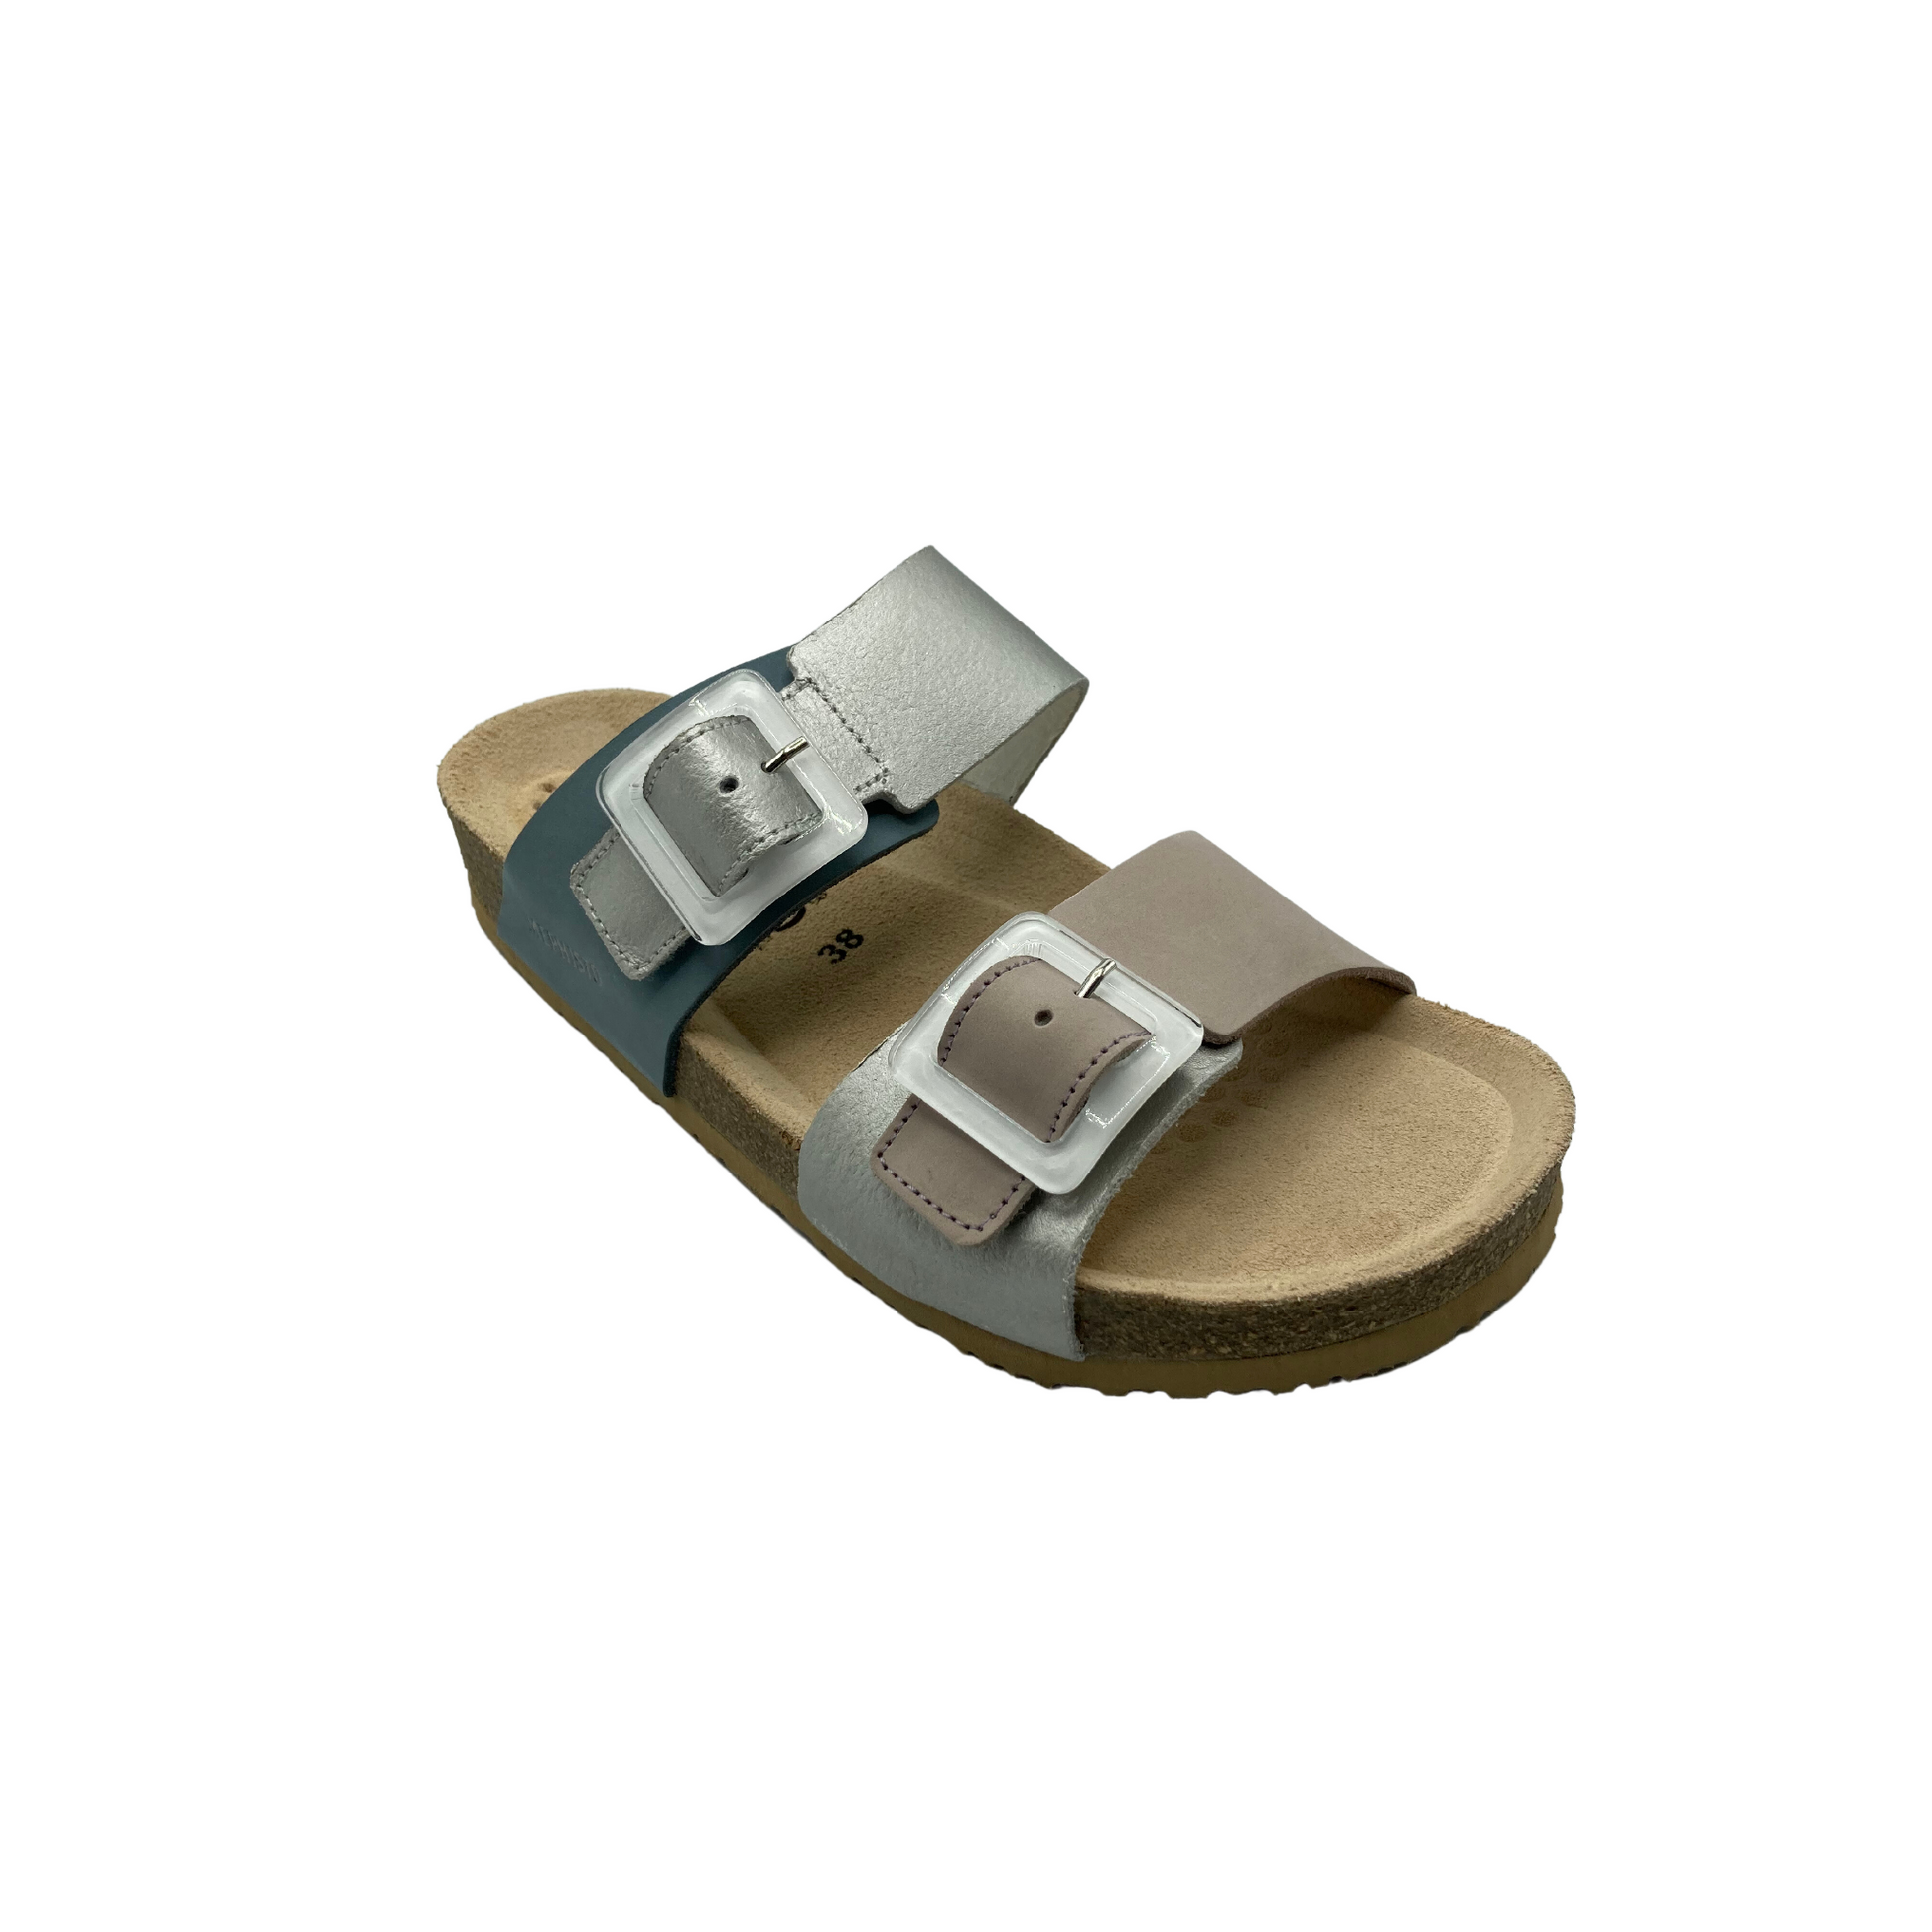  Madison cork sandals boast a minimalistic design with a perla silver hue.